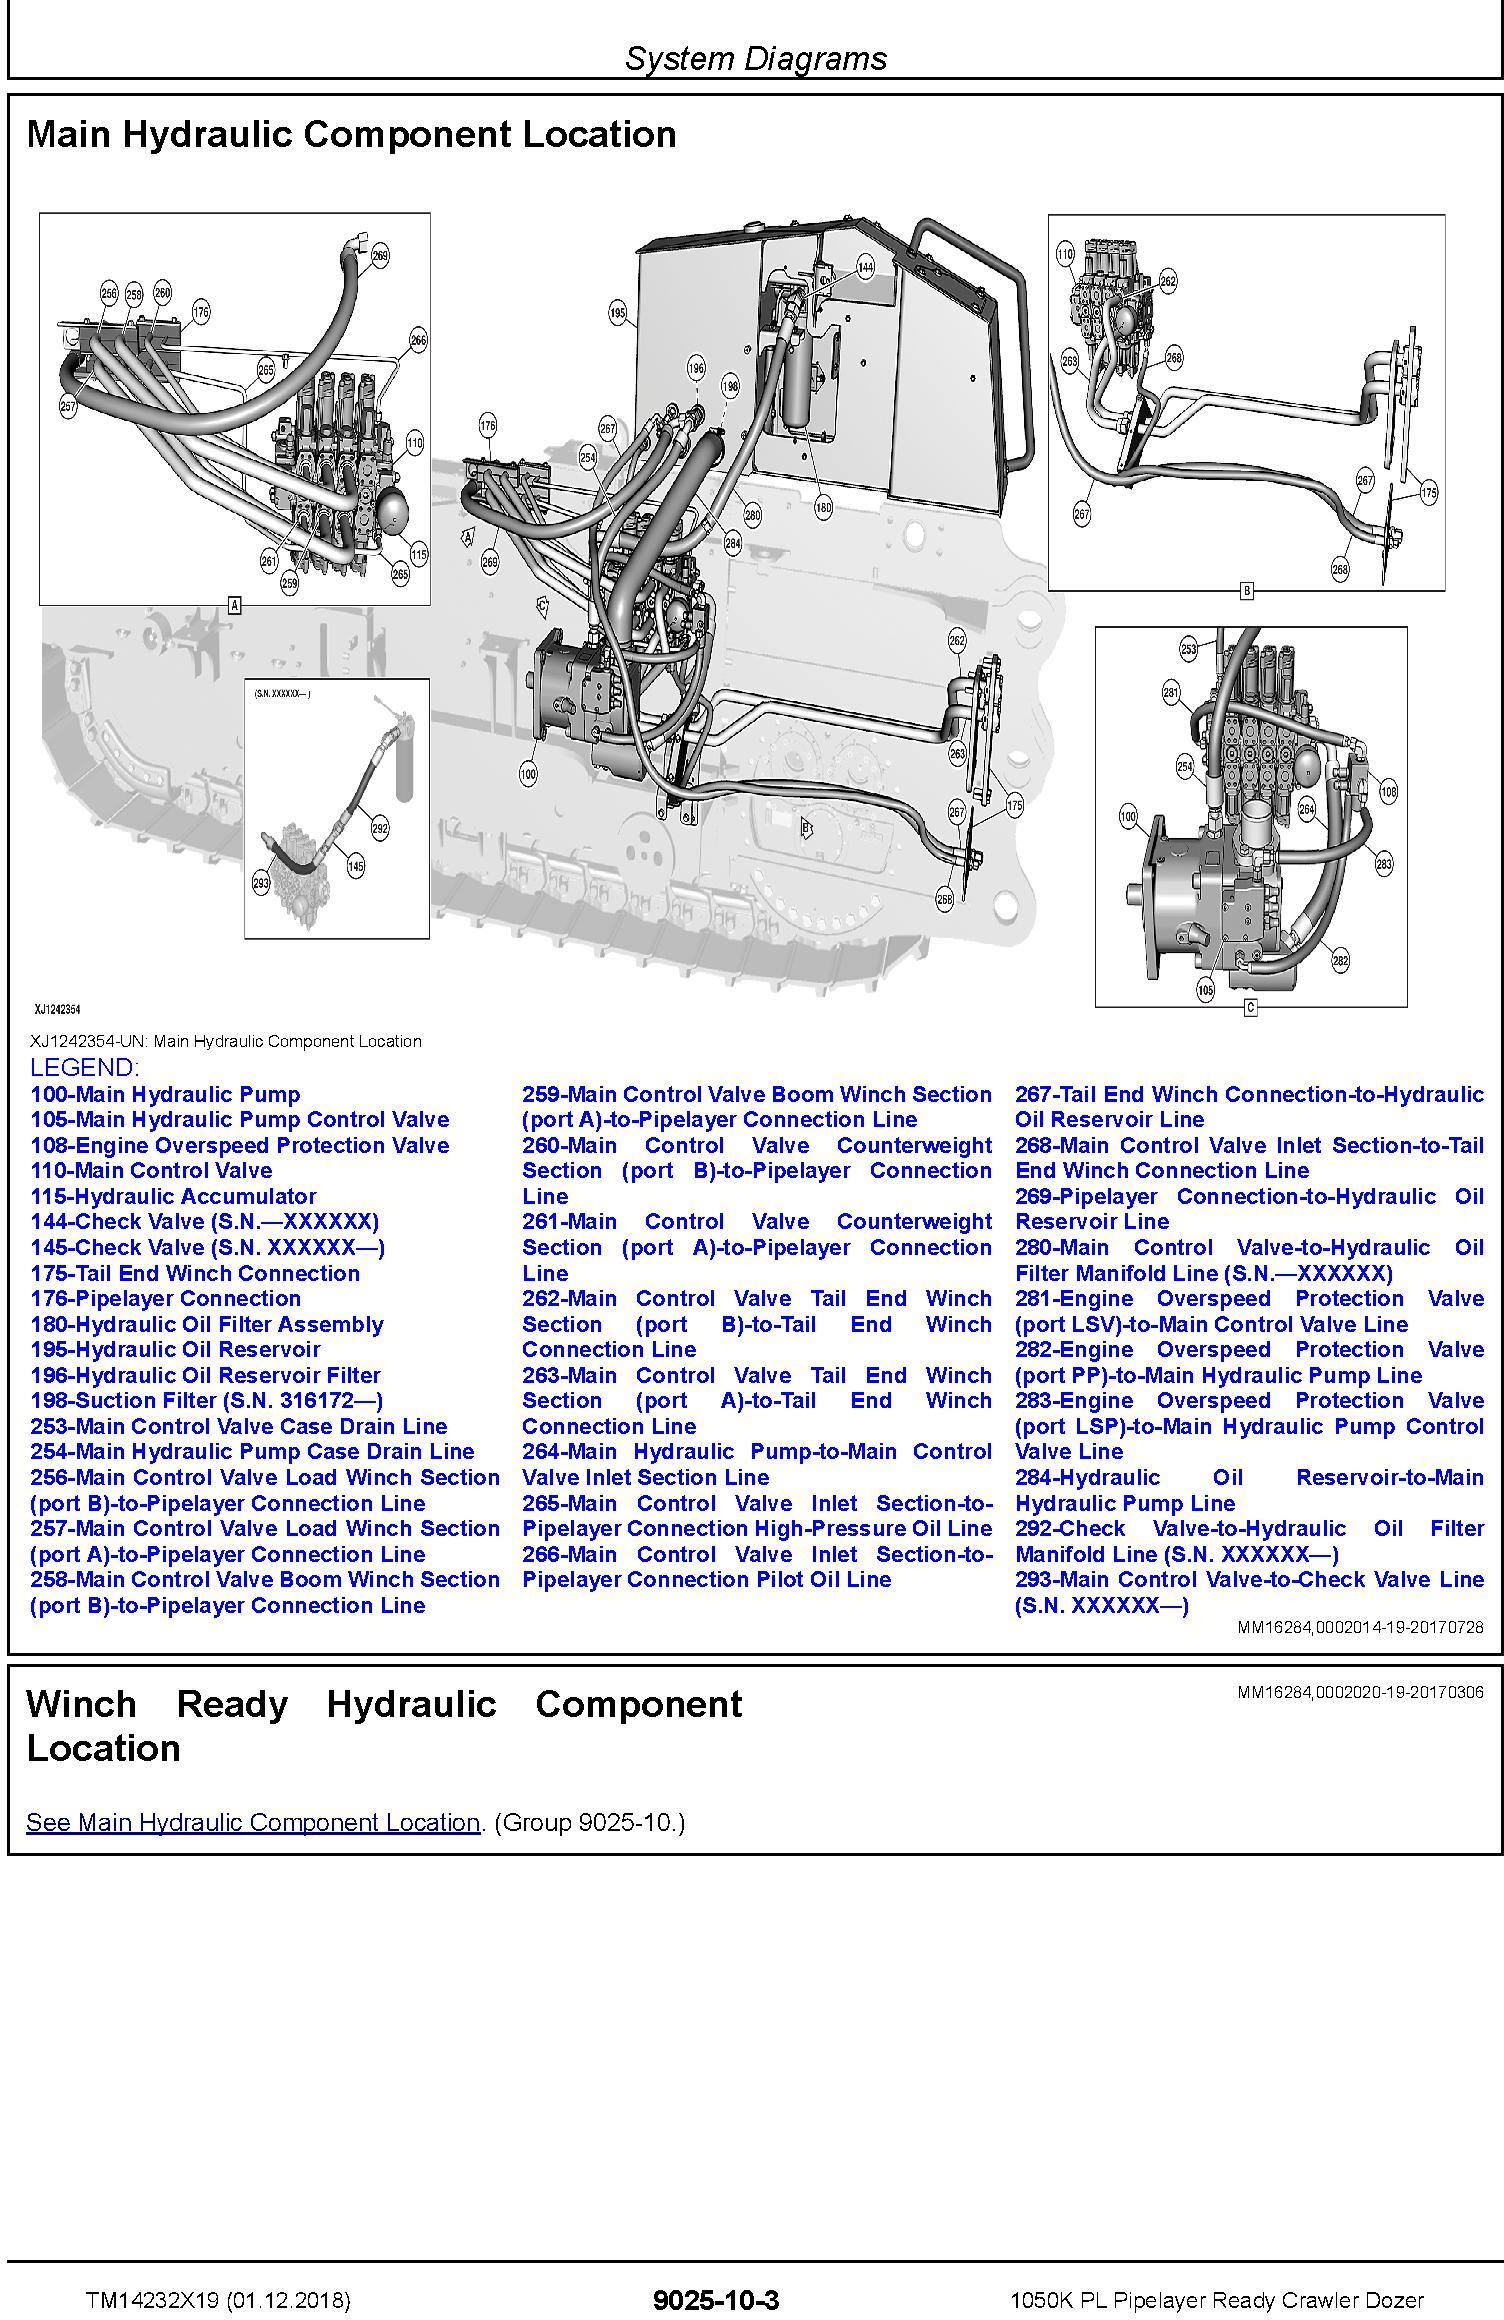 John Deere 1050K PL (SN.F310922-318801) Pipelayer Ready Crawler Dozer Diagnostic Manual (TM14232X19) - 3